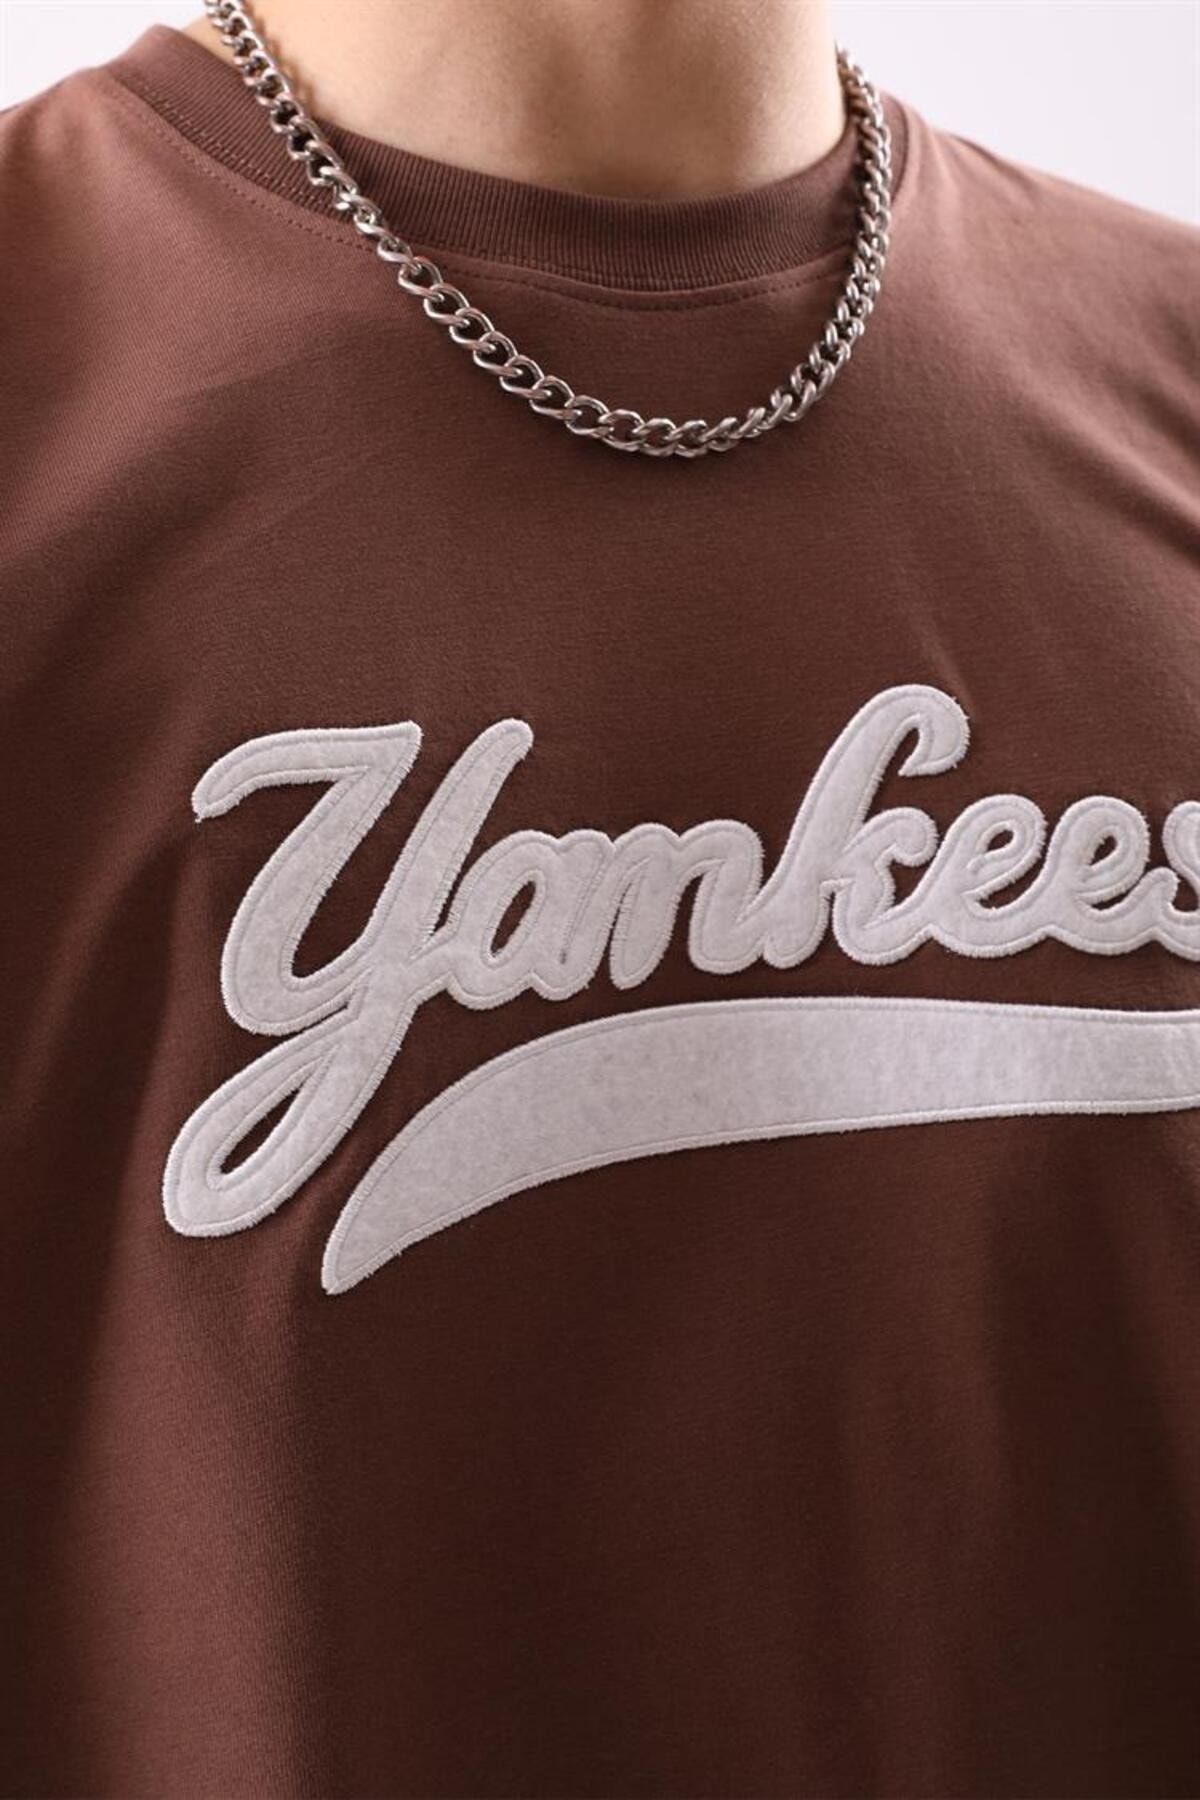 Yankees Polo Yaka Siyah Oversize Forma - Flaw Wears